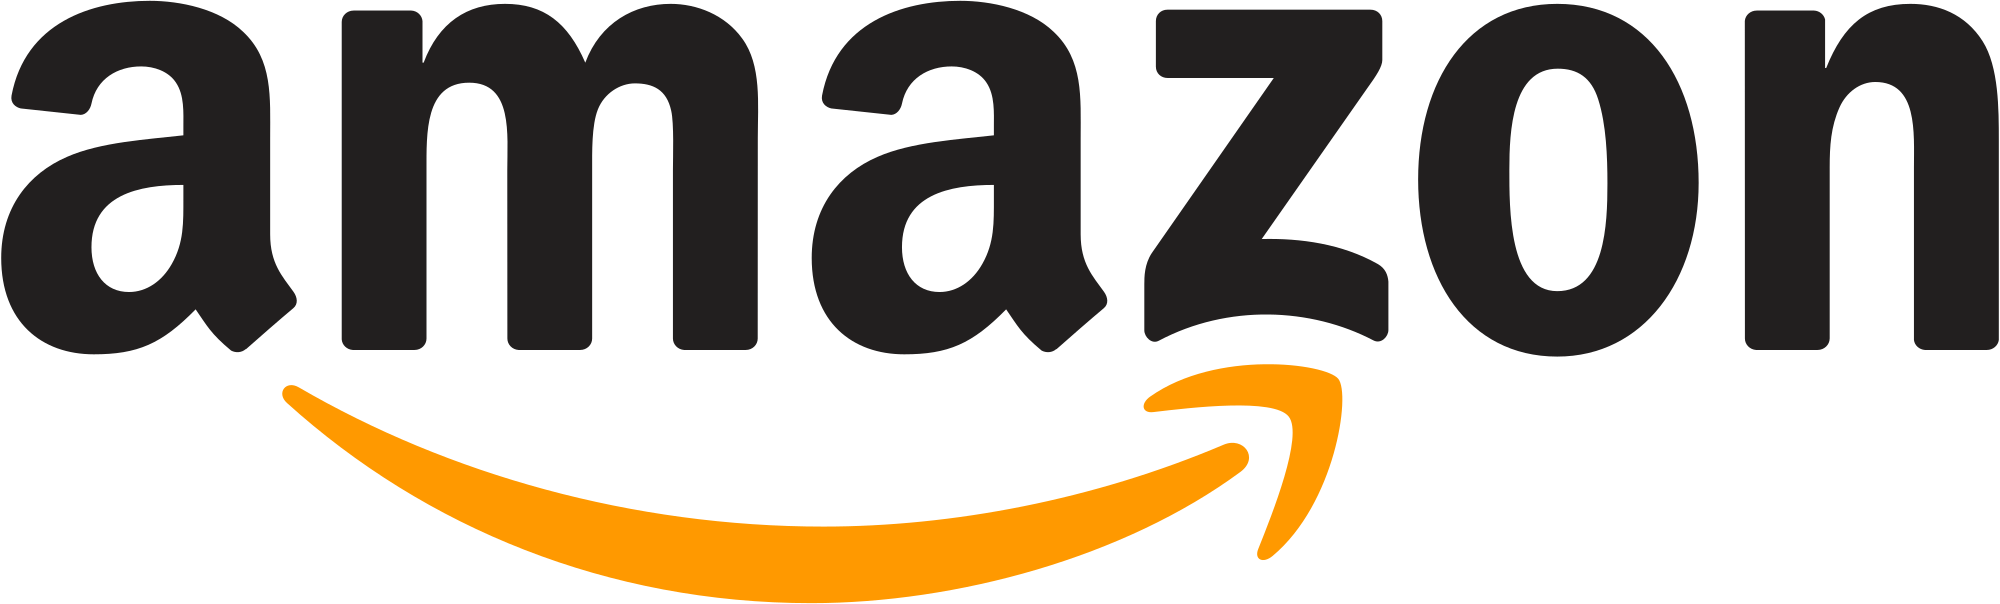 Amazon logo PNG images free download - Amazon Logo Transparent Background